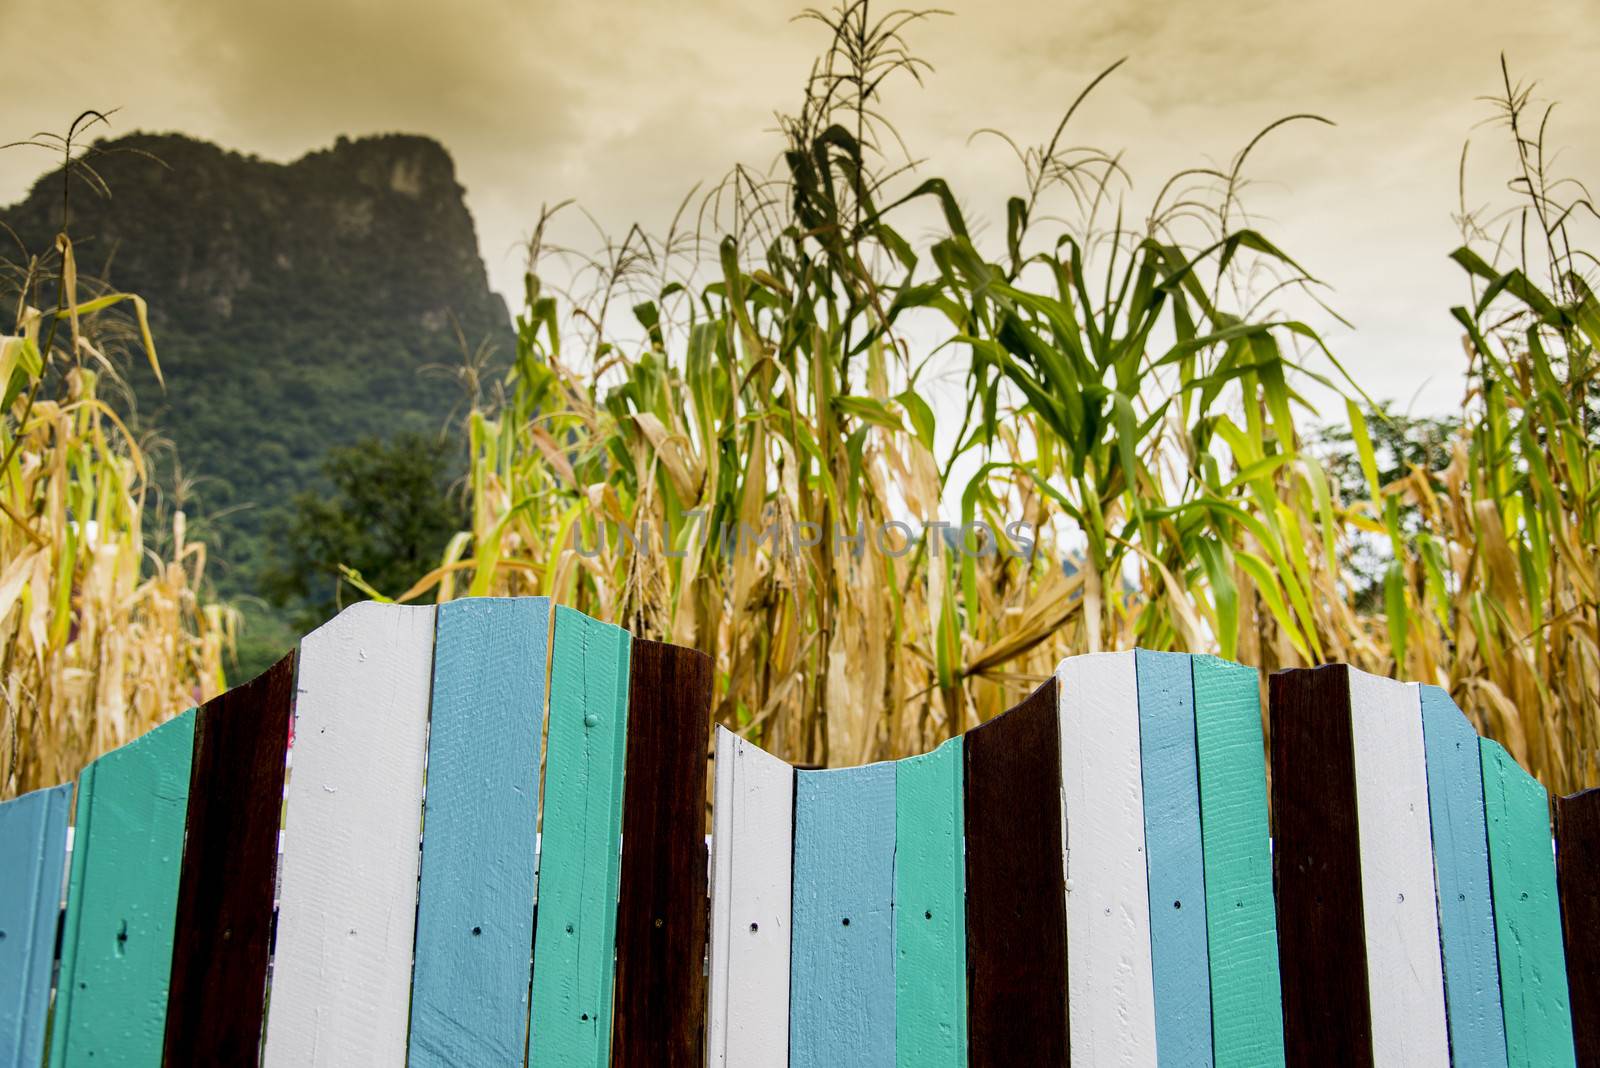 Corn field with colorful wooden fence1 by gjeerawut